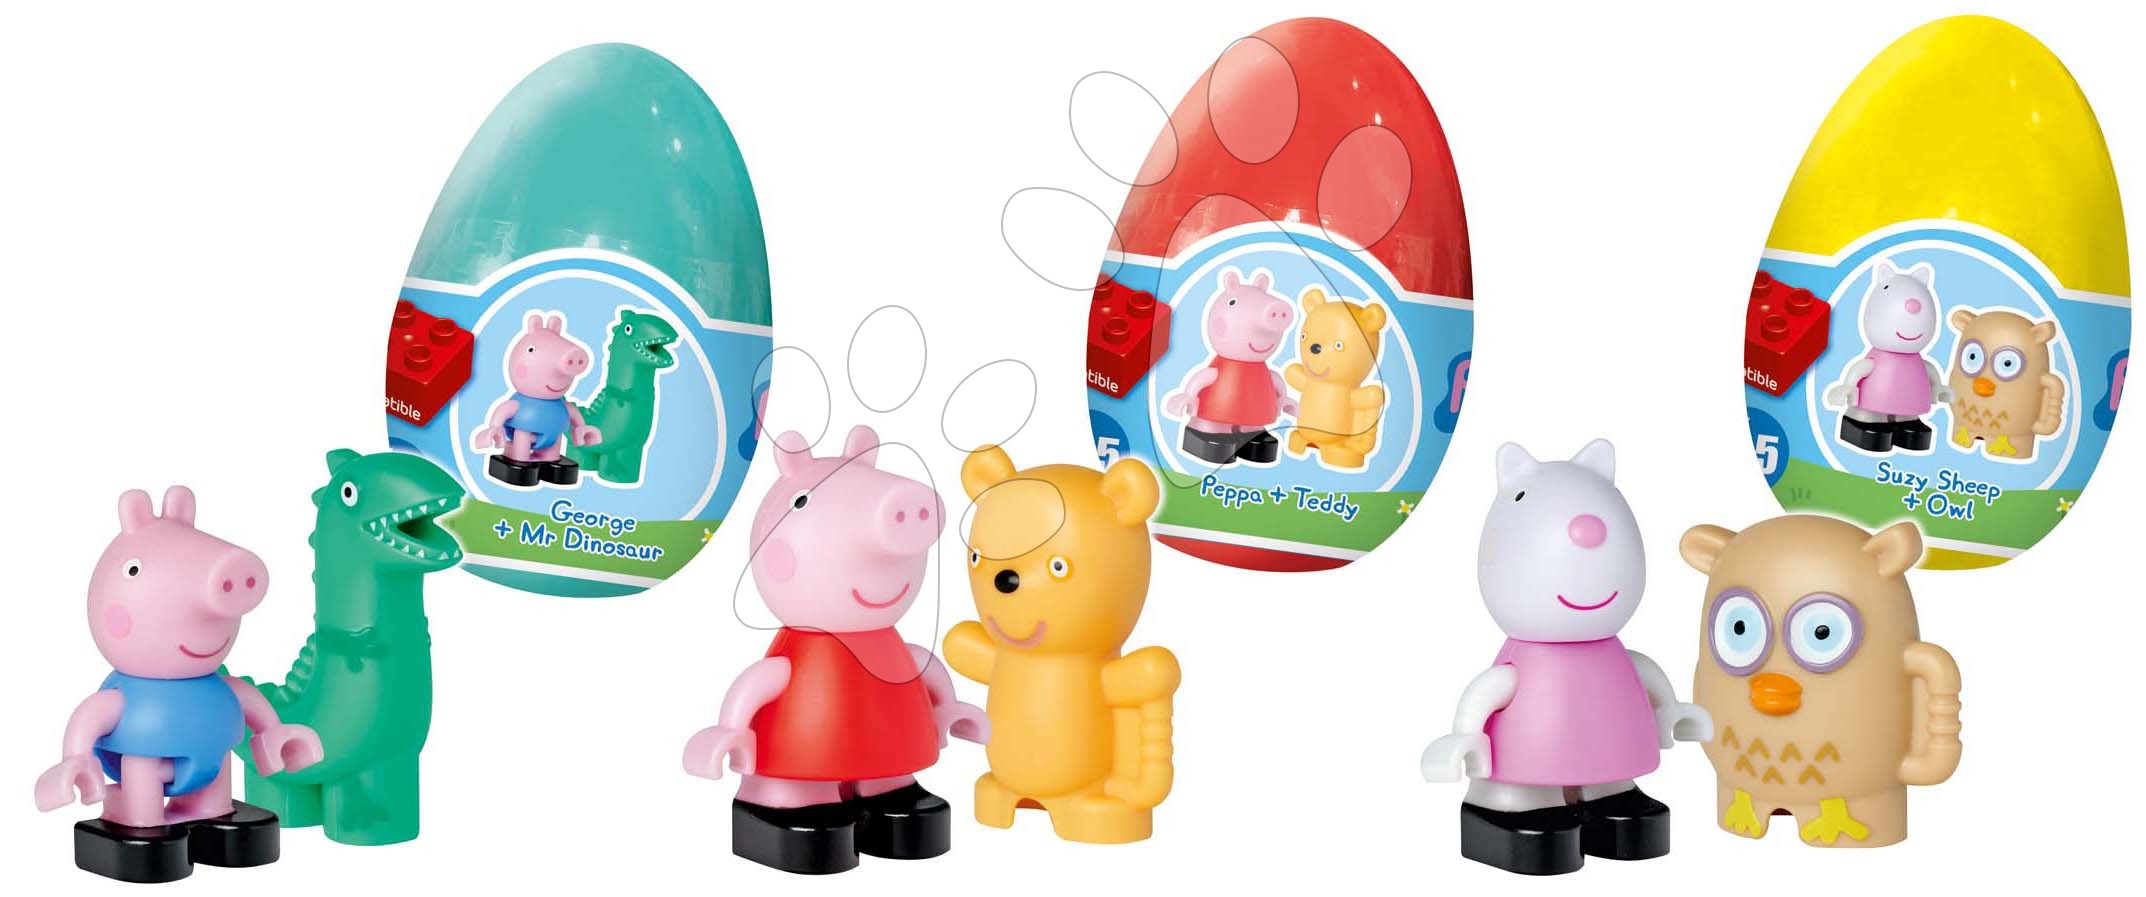 Stavebnice Peppa Pig Funny Eggs XL PlayBig Bloxx BIG ve vajíčku s figurkami – sada 3 druhů od 1,5-5 let